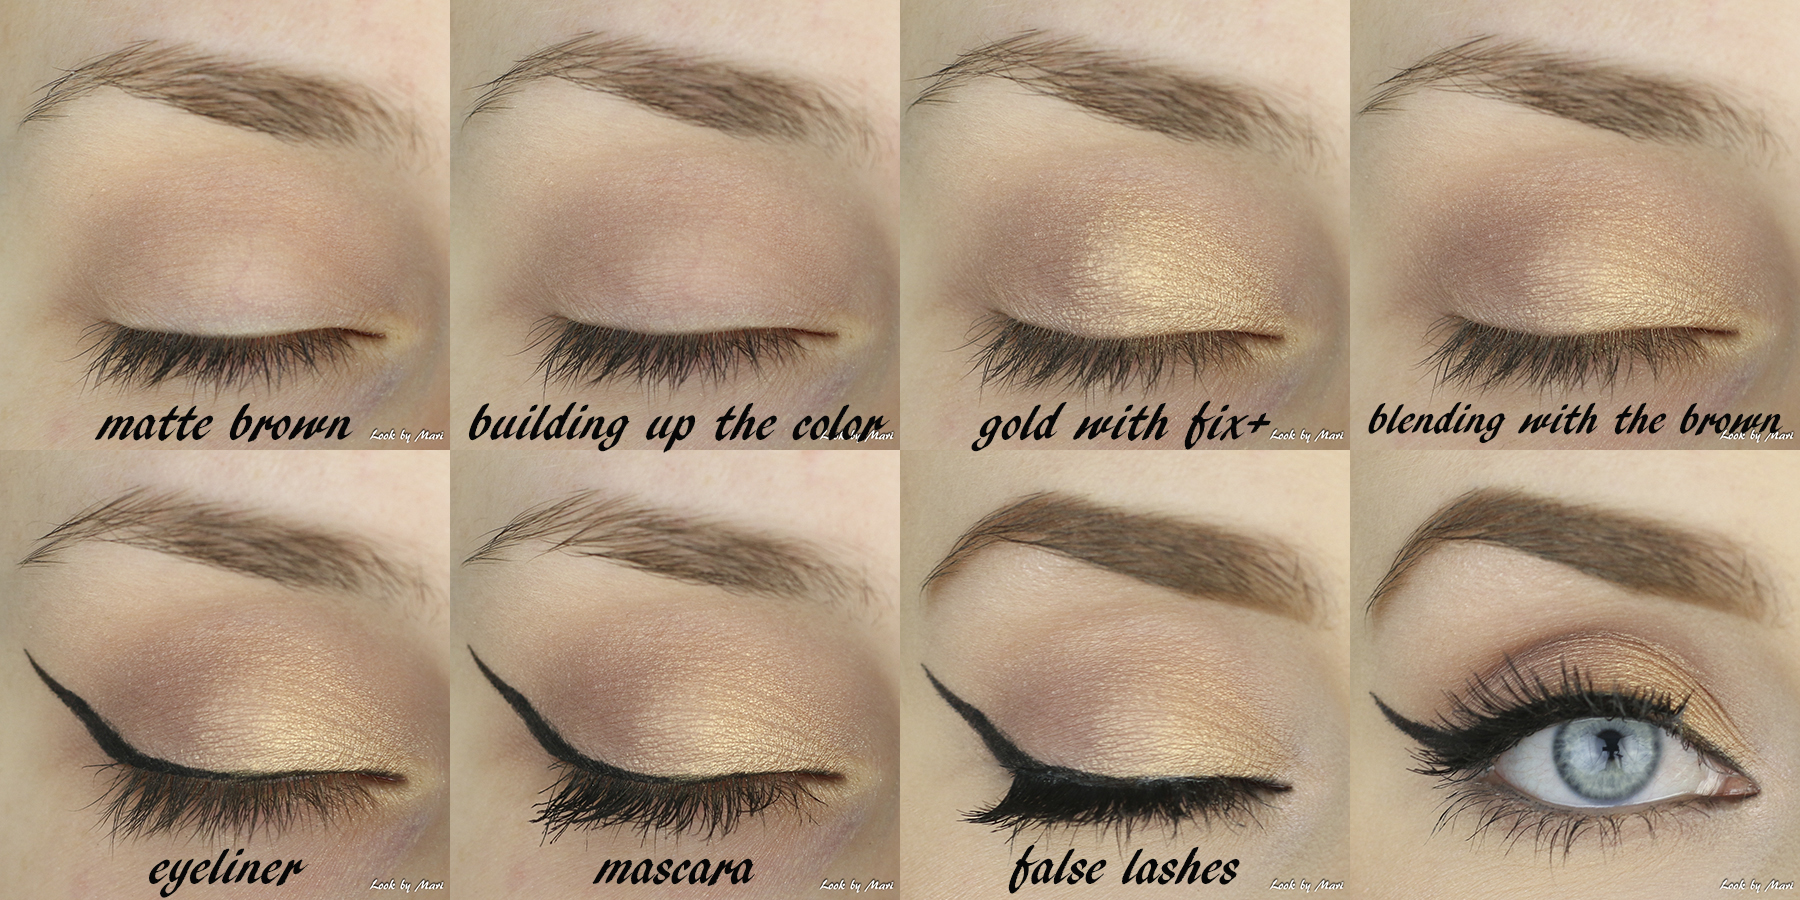 4 bh cosmetics x carli bybel eyeshadow palette review kokemuksia eye makeup looks ideas inspo natural eye makeup (8)